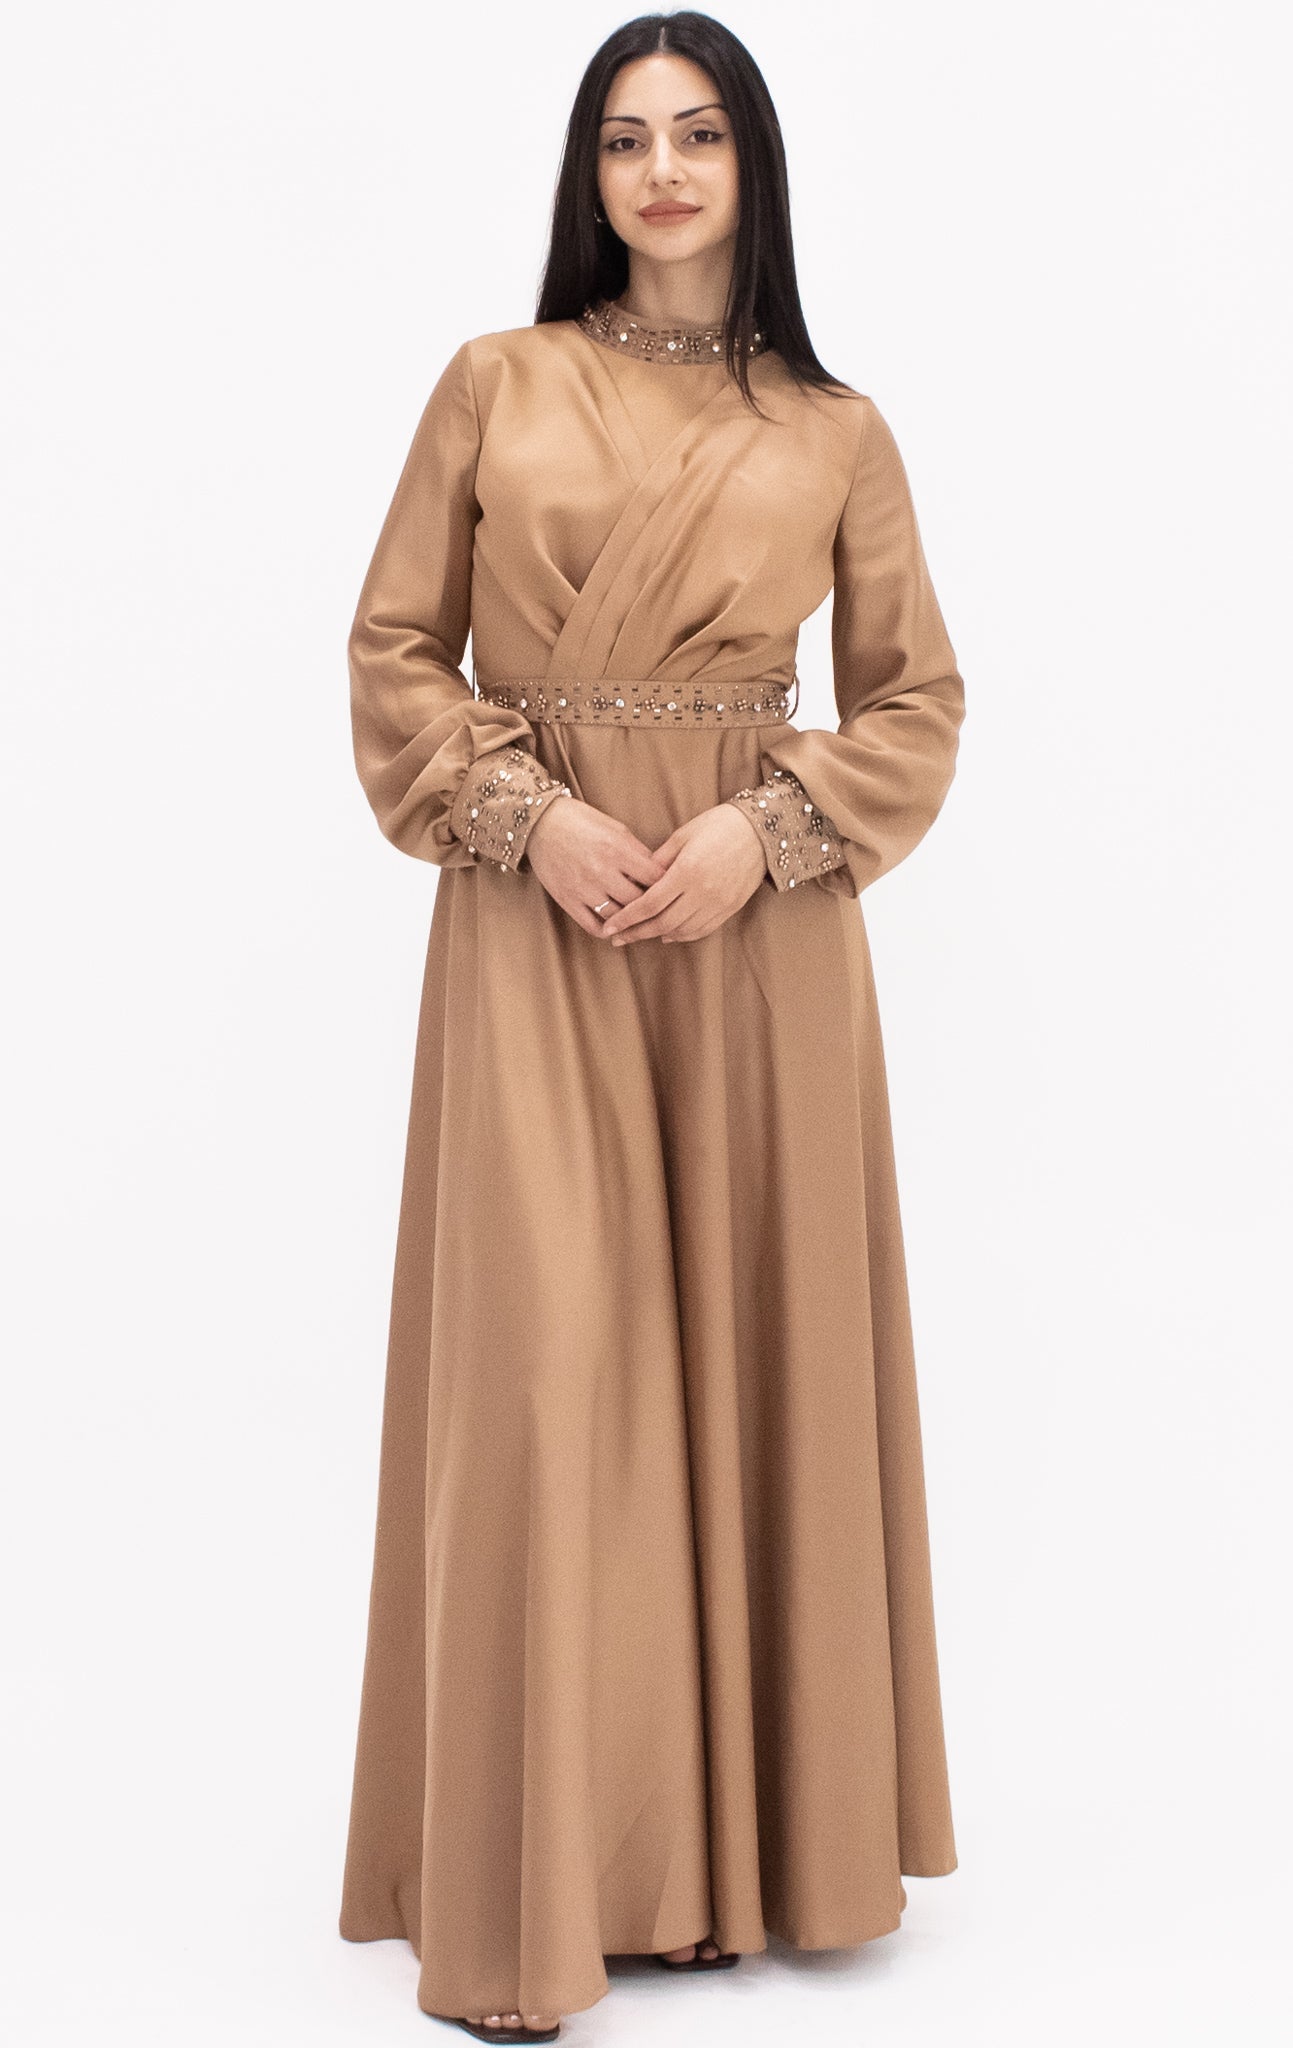 Leah gem gown - Brown